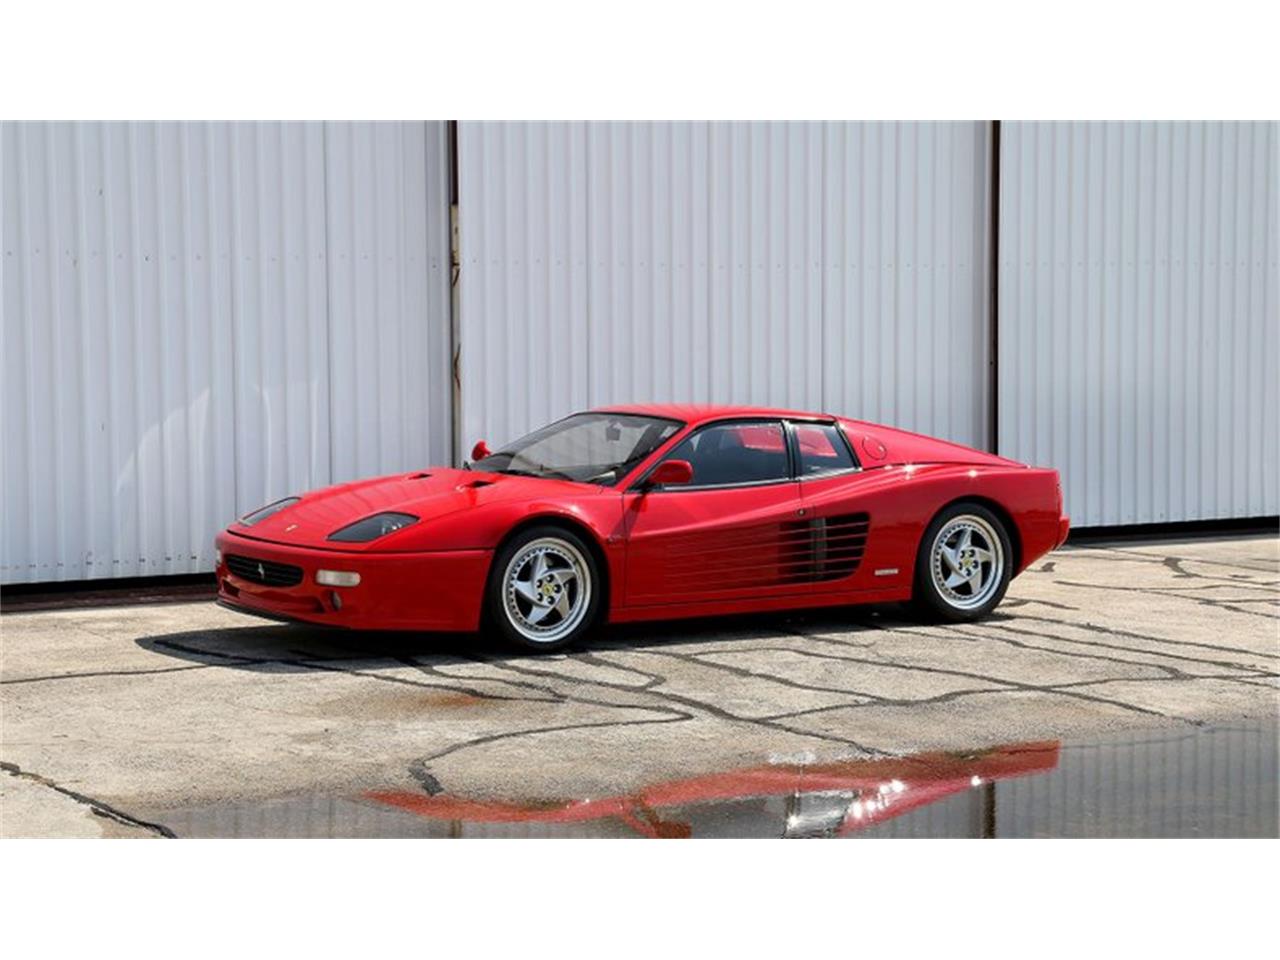 For Sale at Auction: 1996 Ferrari 512 in Monterey, California for sale in Monterey, CA